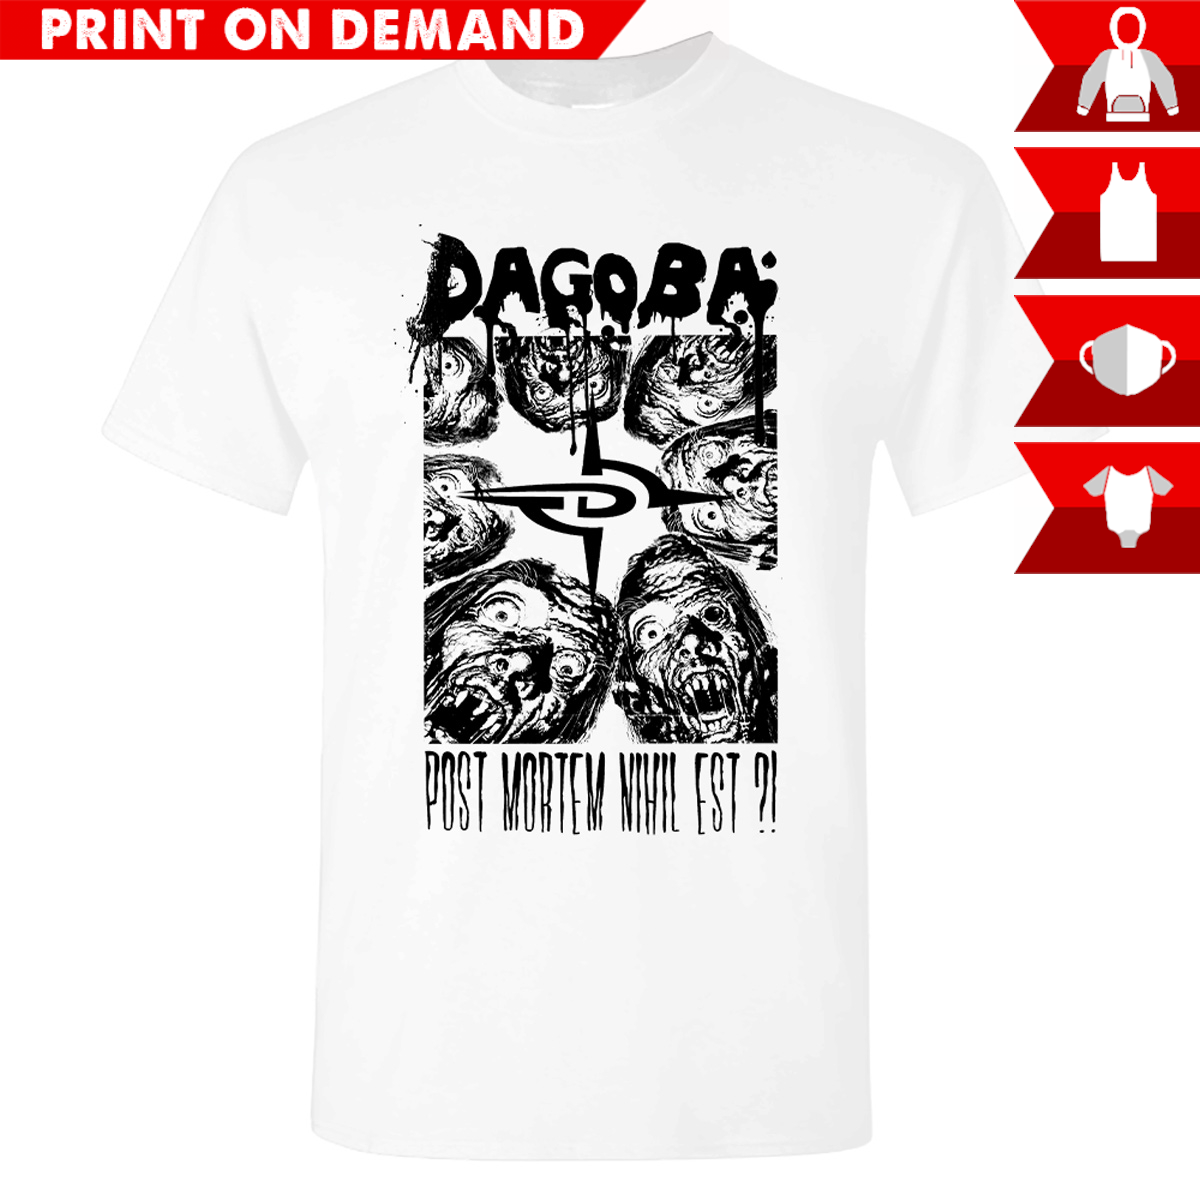 Dagoba - Zombie - Print on demand